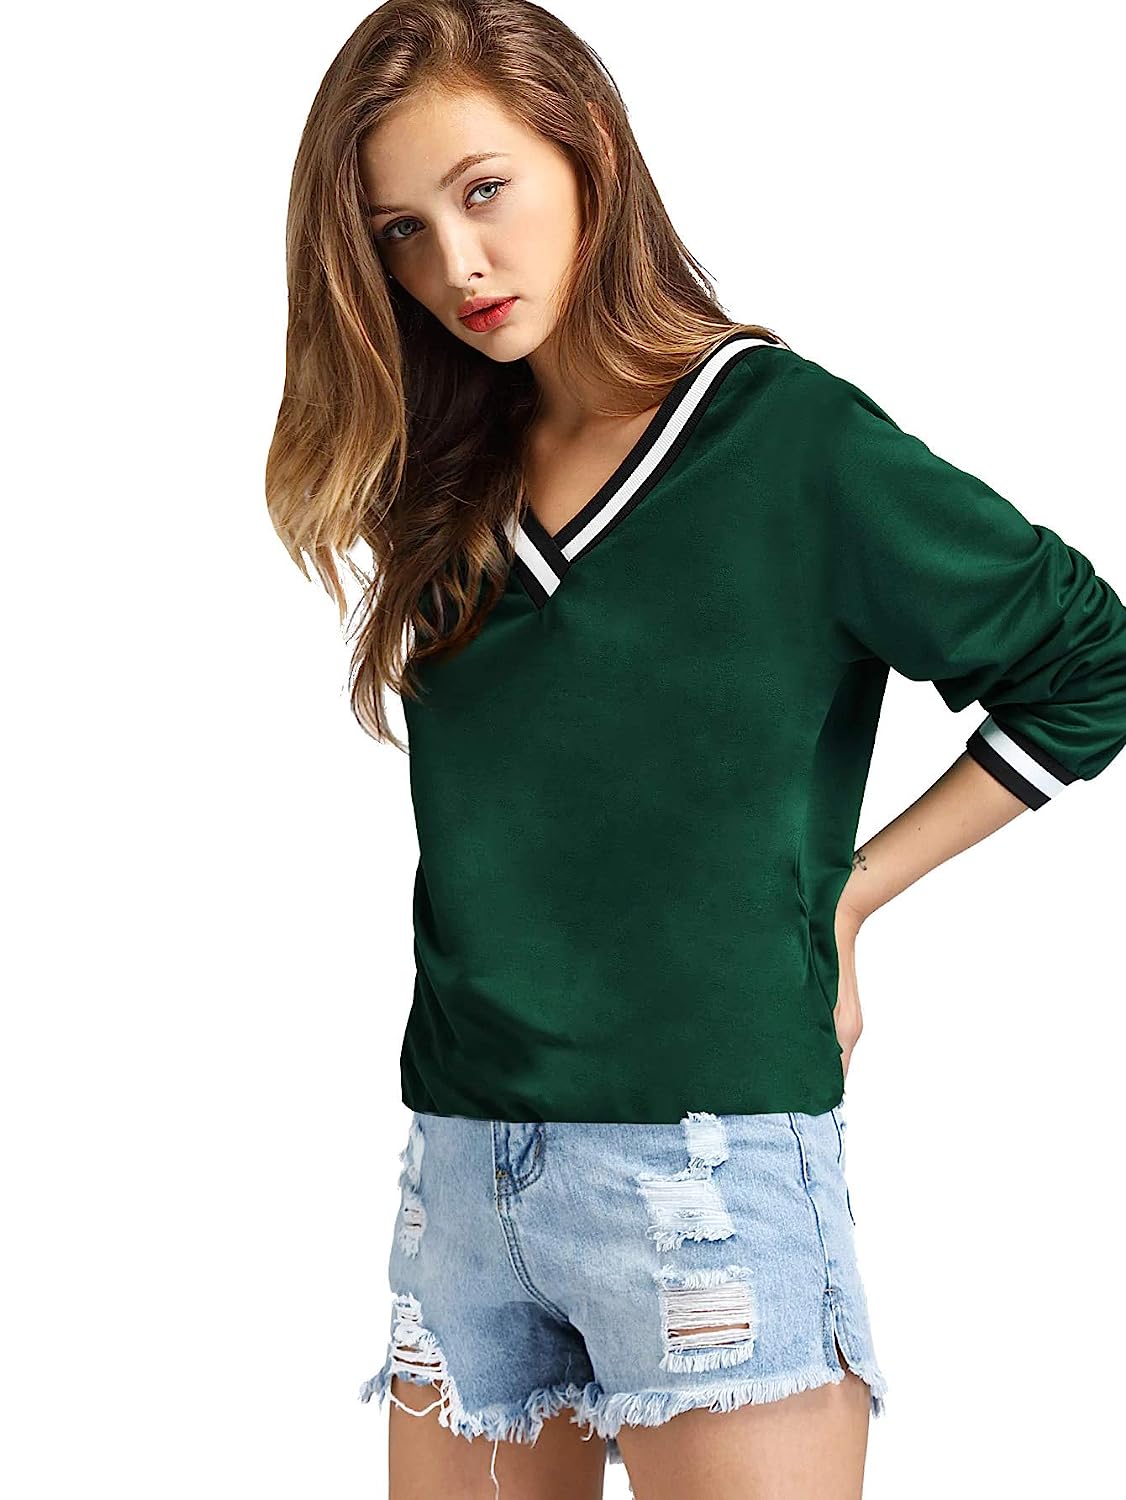 Fabricorn Stylish Plain Green Long Sleeve Cotton Tshirt for Women (Green) -  Women's T-Shirts in Sri Lanka from Arcade Online Shopping - Just Rs. 3722!